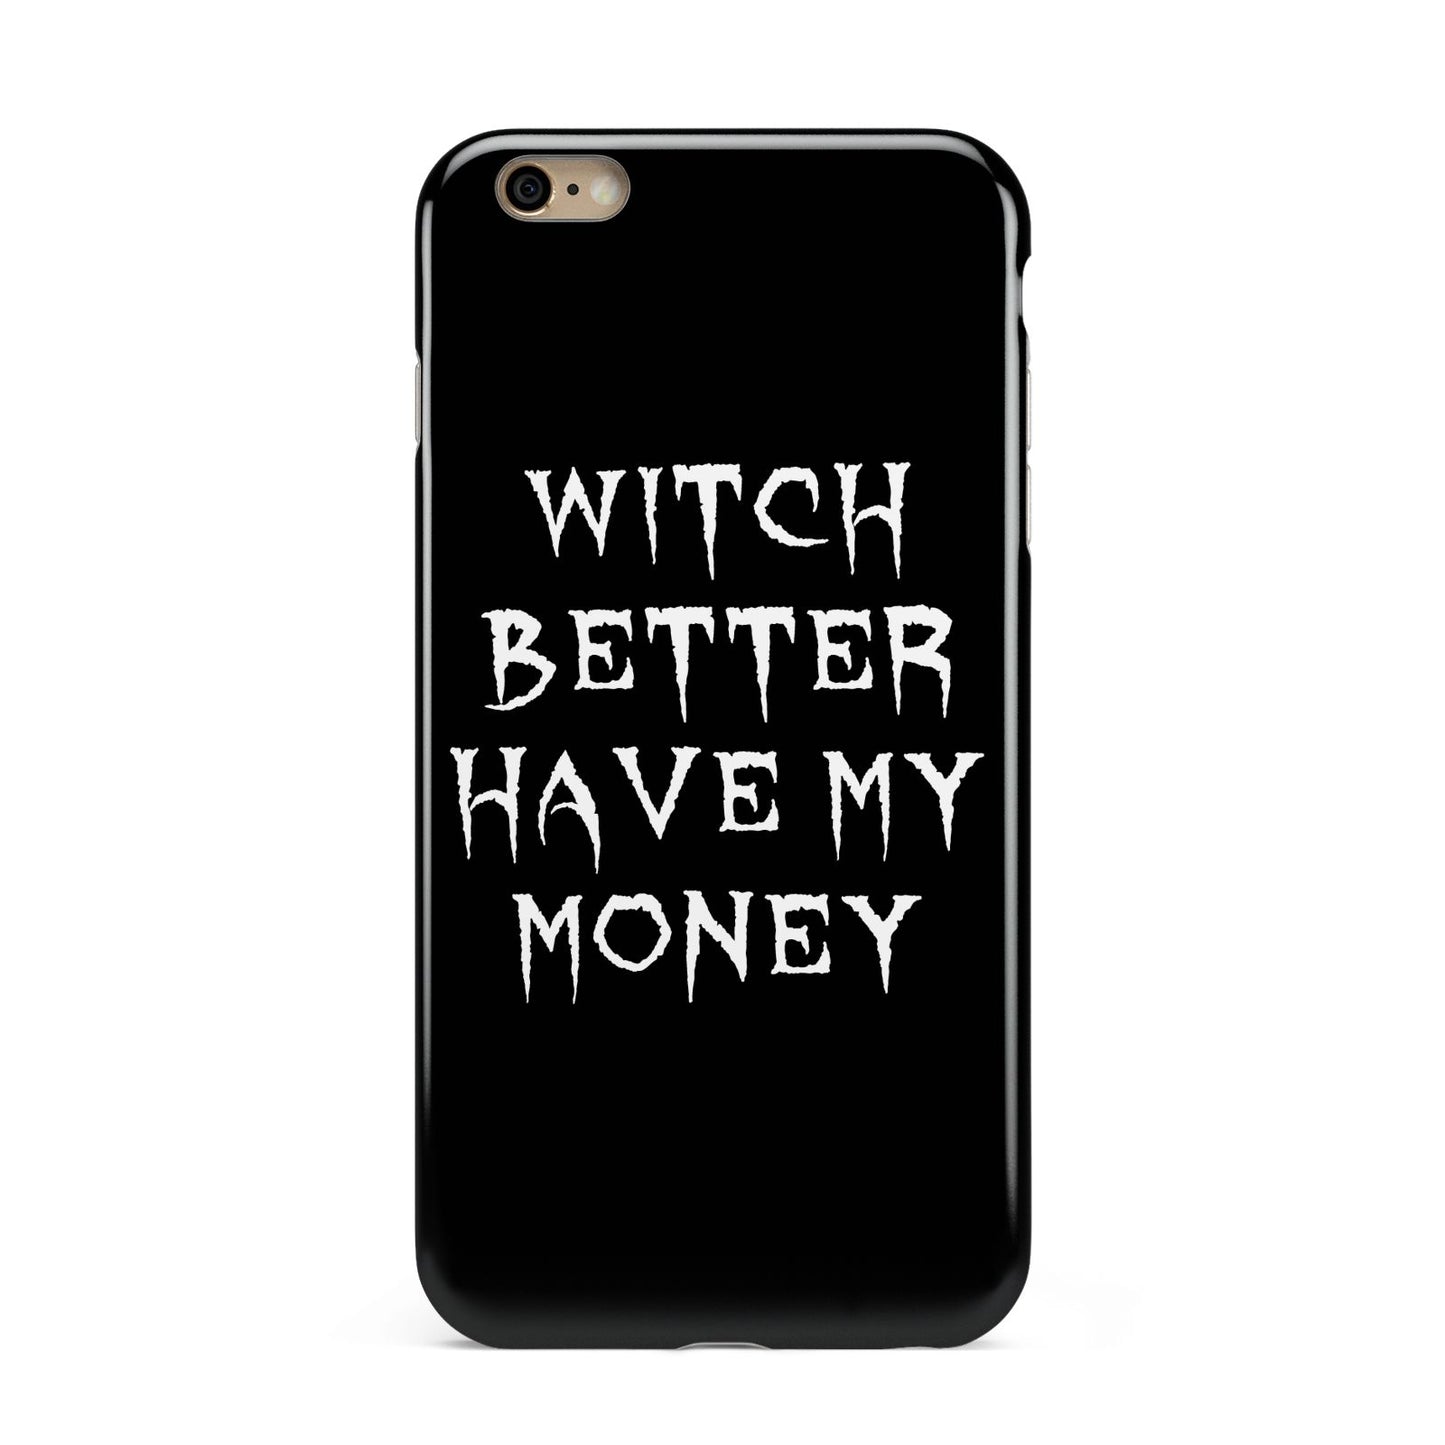 Witch Better Have My Money Apple iPhone 6 Plus 3D Tough Case